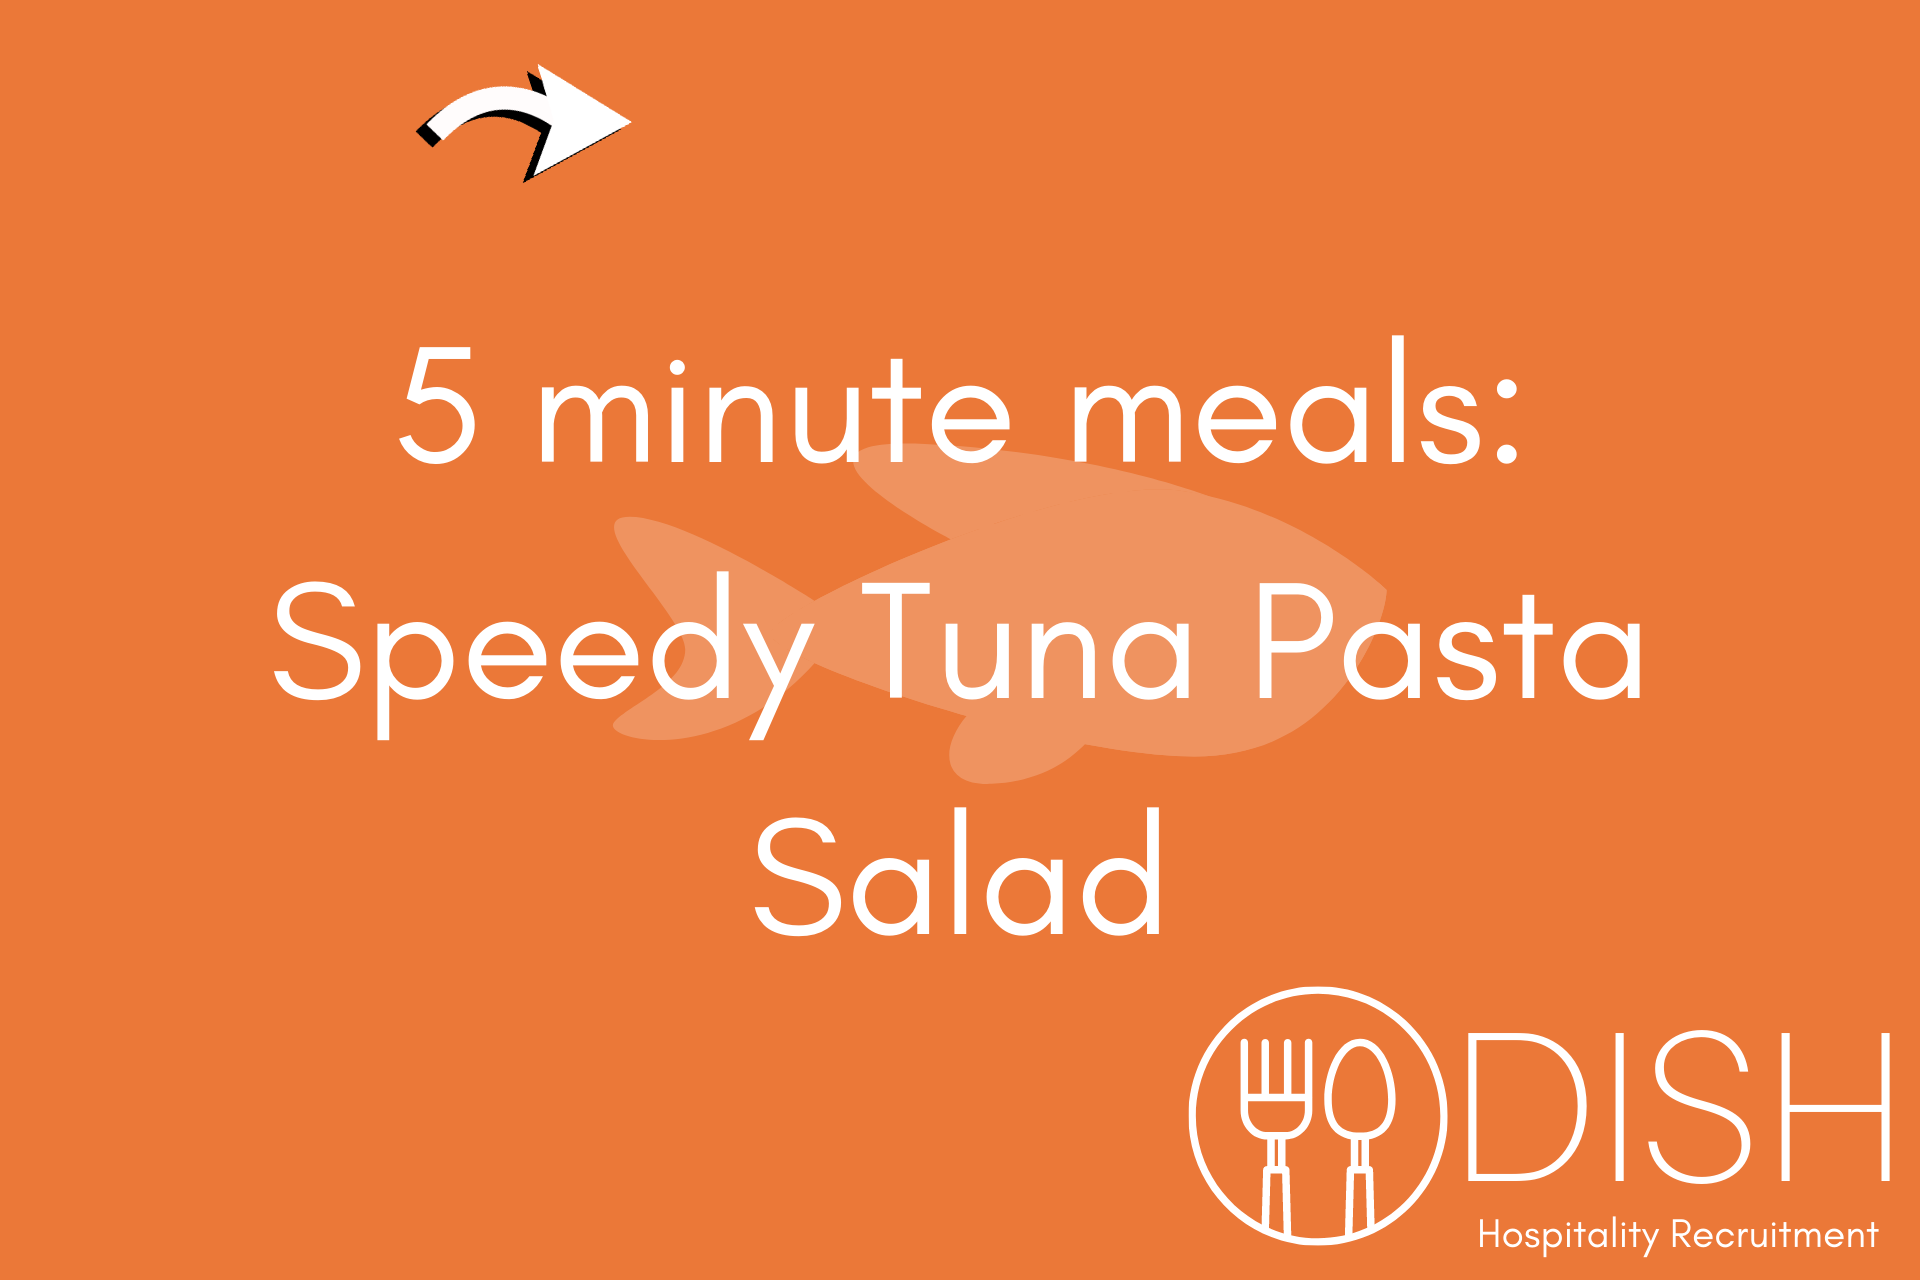 5 minute meals: Speedy Tuna Pasta Salad